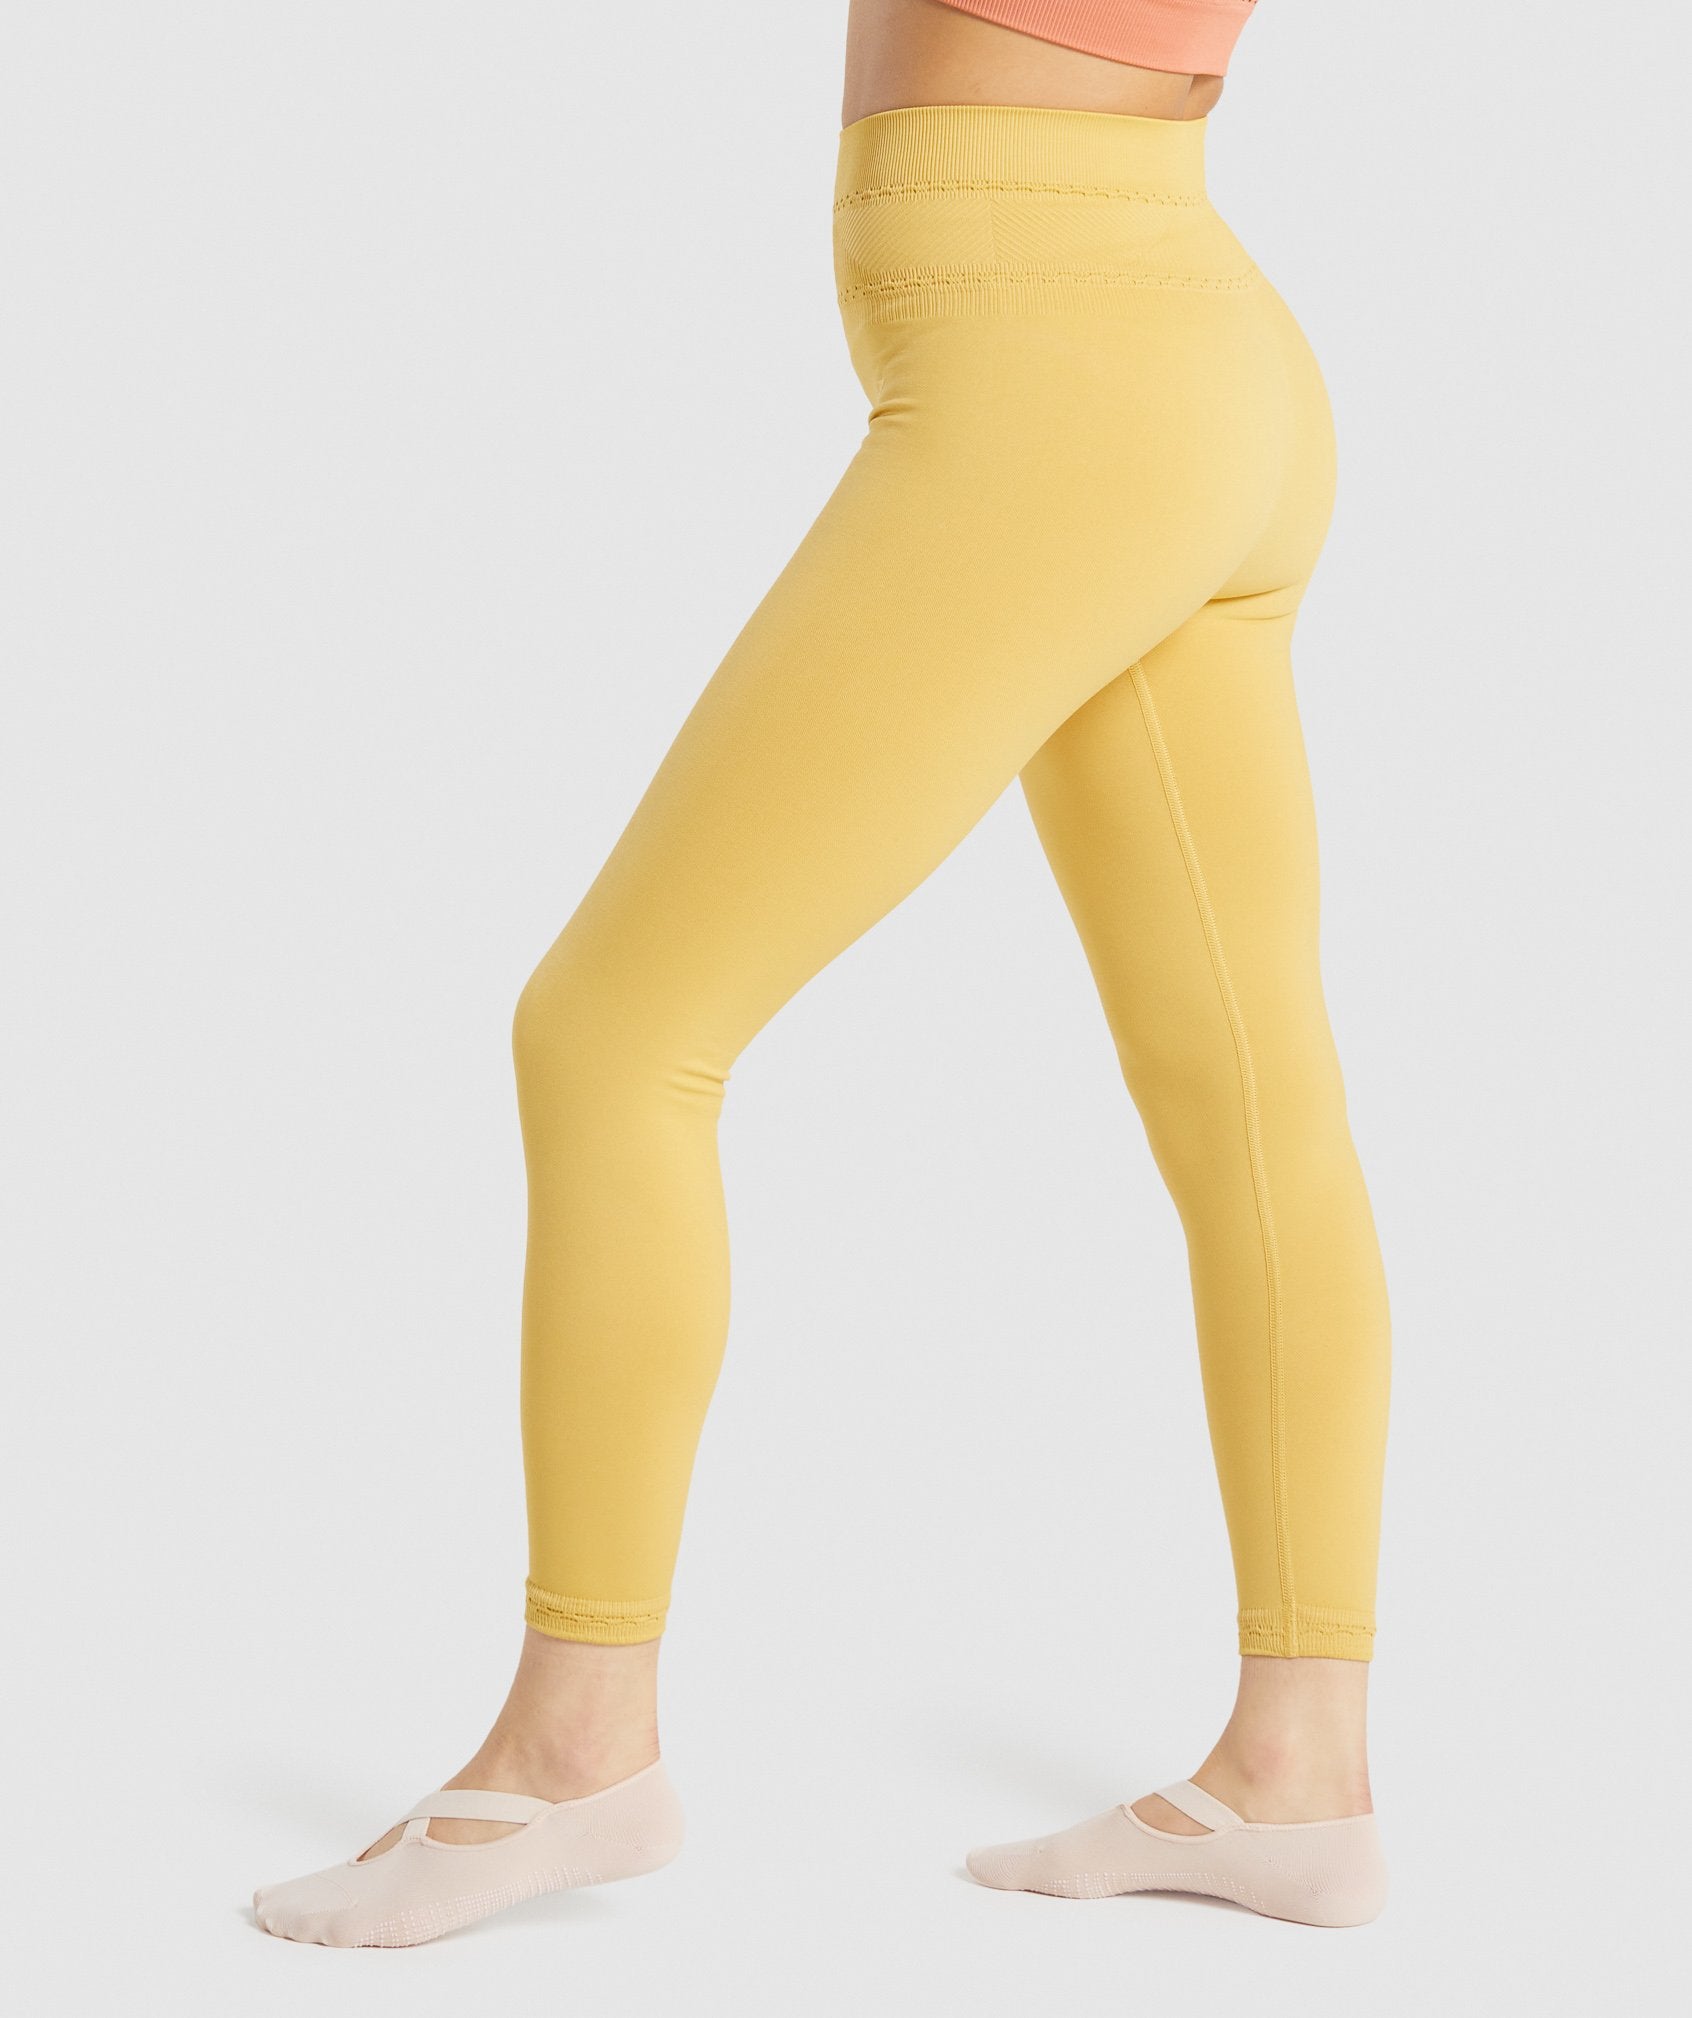 Get noticed in these vibrant Gymshark studio leggings